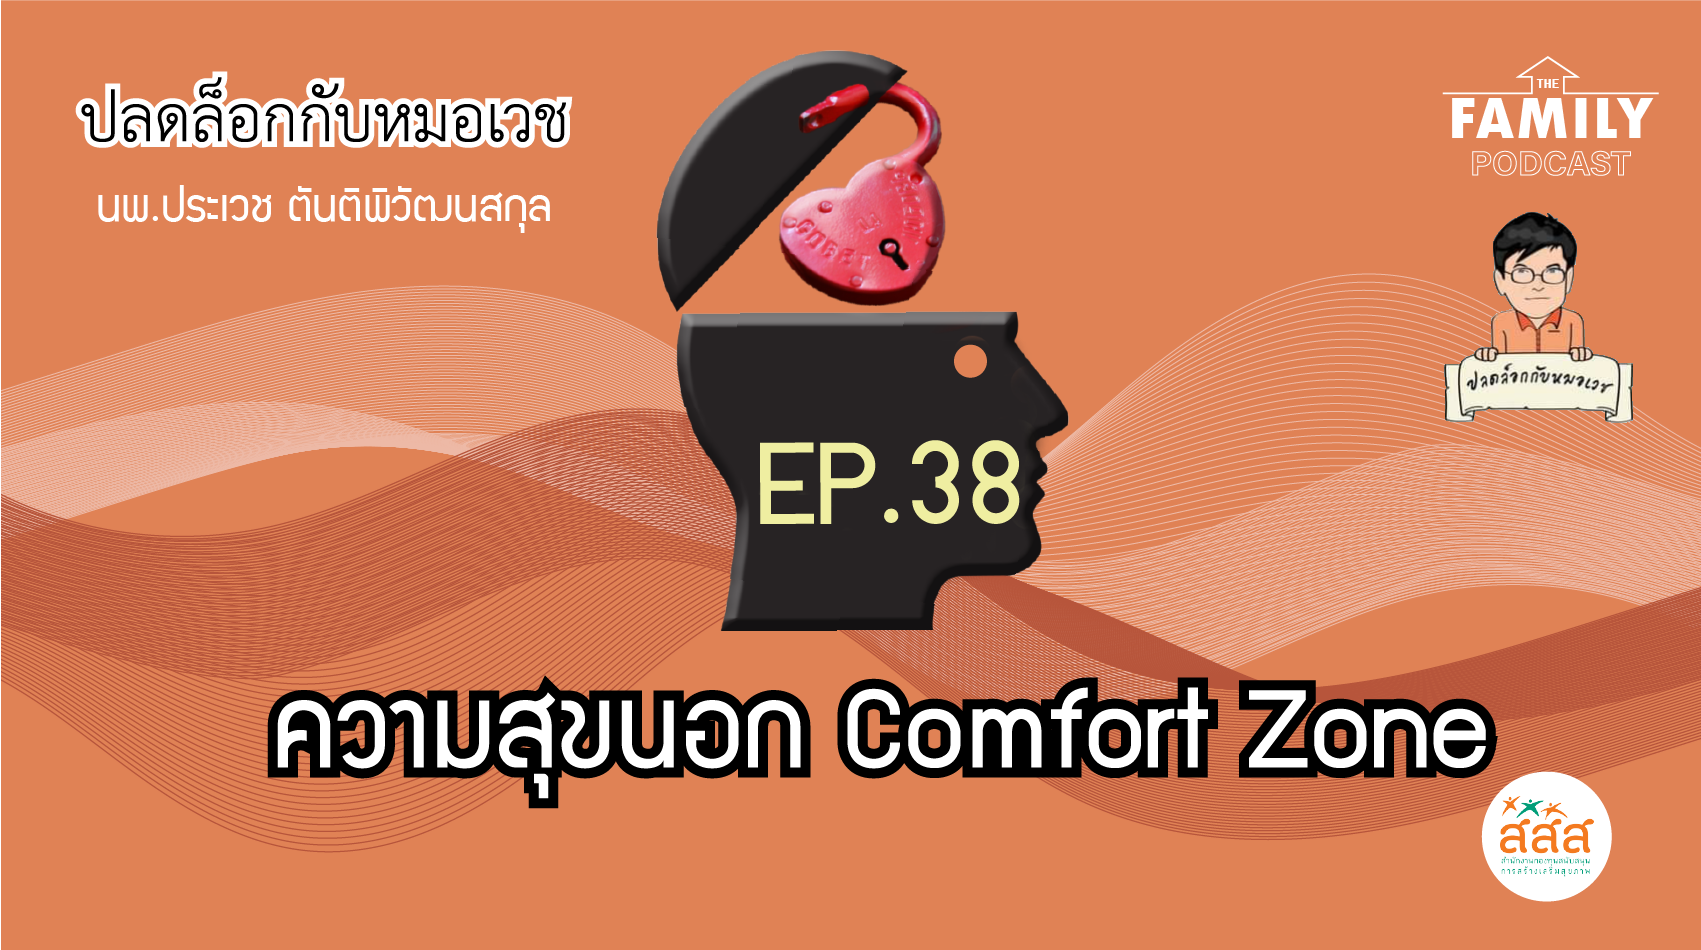 The Family Podcast ปลดล็อกกับหมอเวช EP.38 ความสุขนอก Comfort Zone